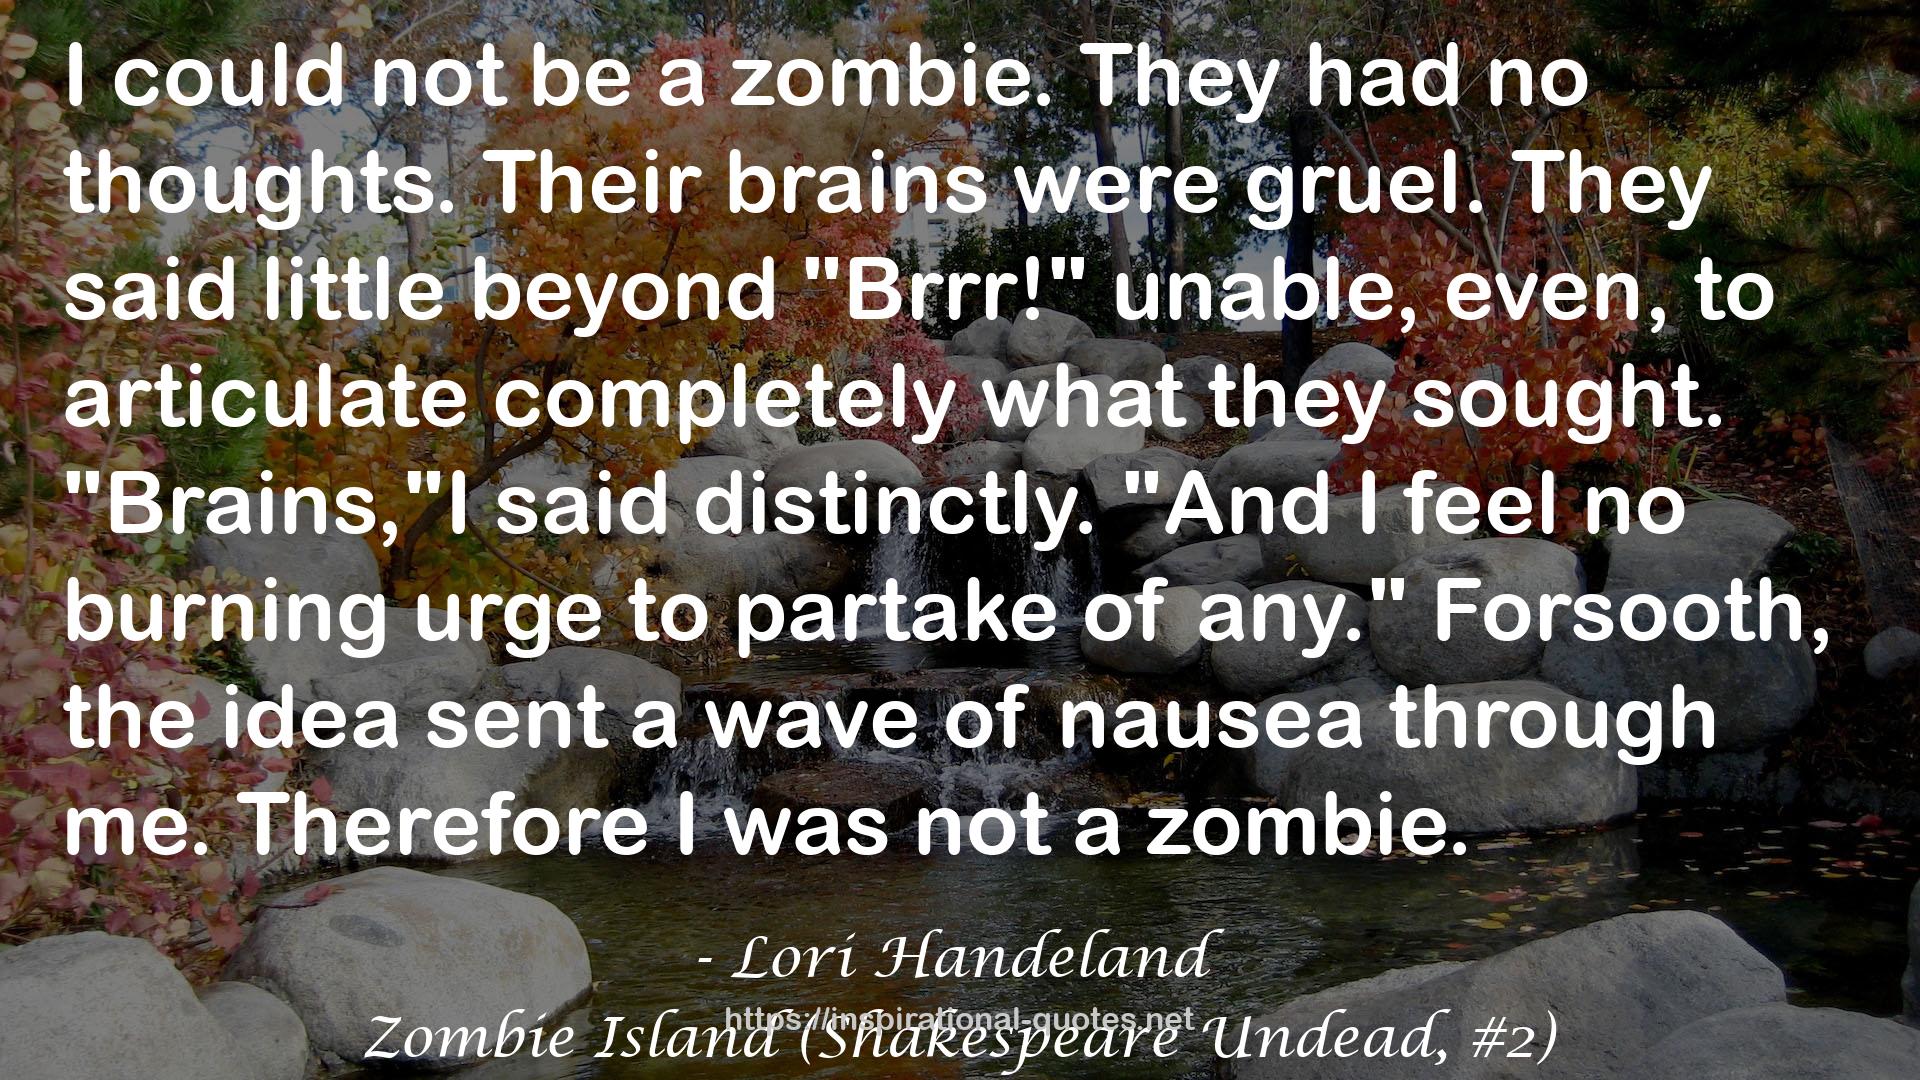 Zombie Island (Shakespeare Undead, #2) QUOTES